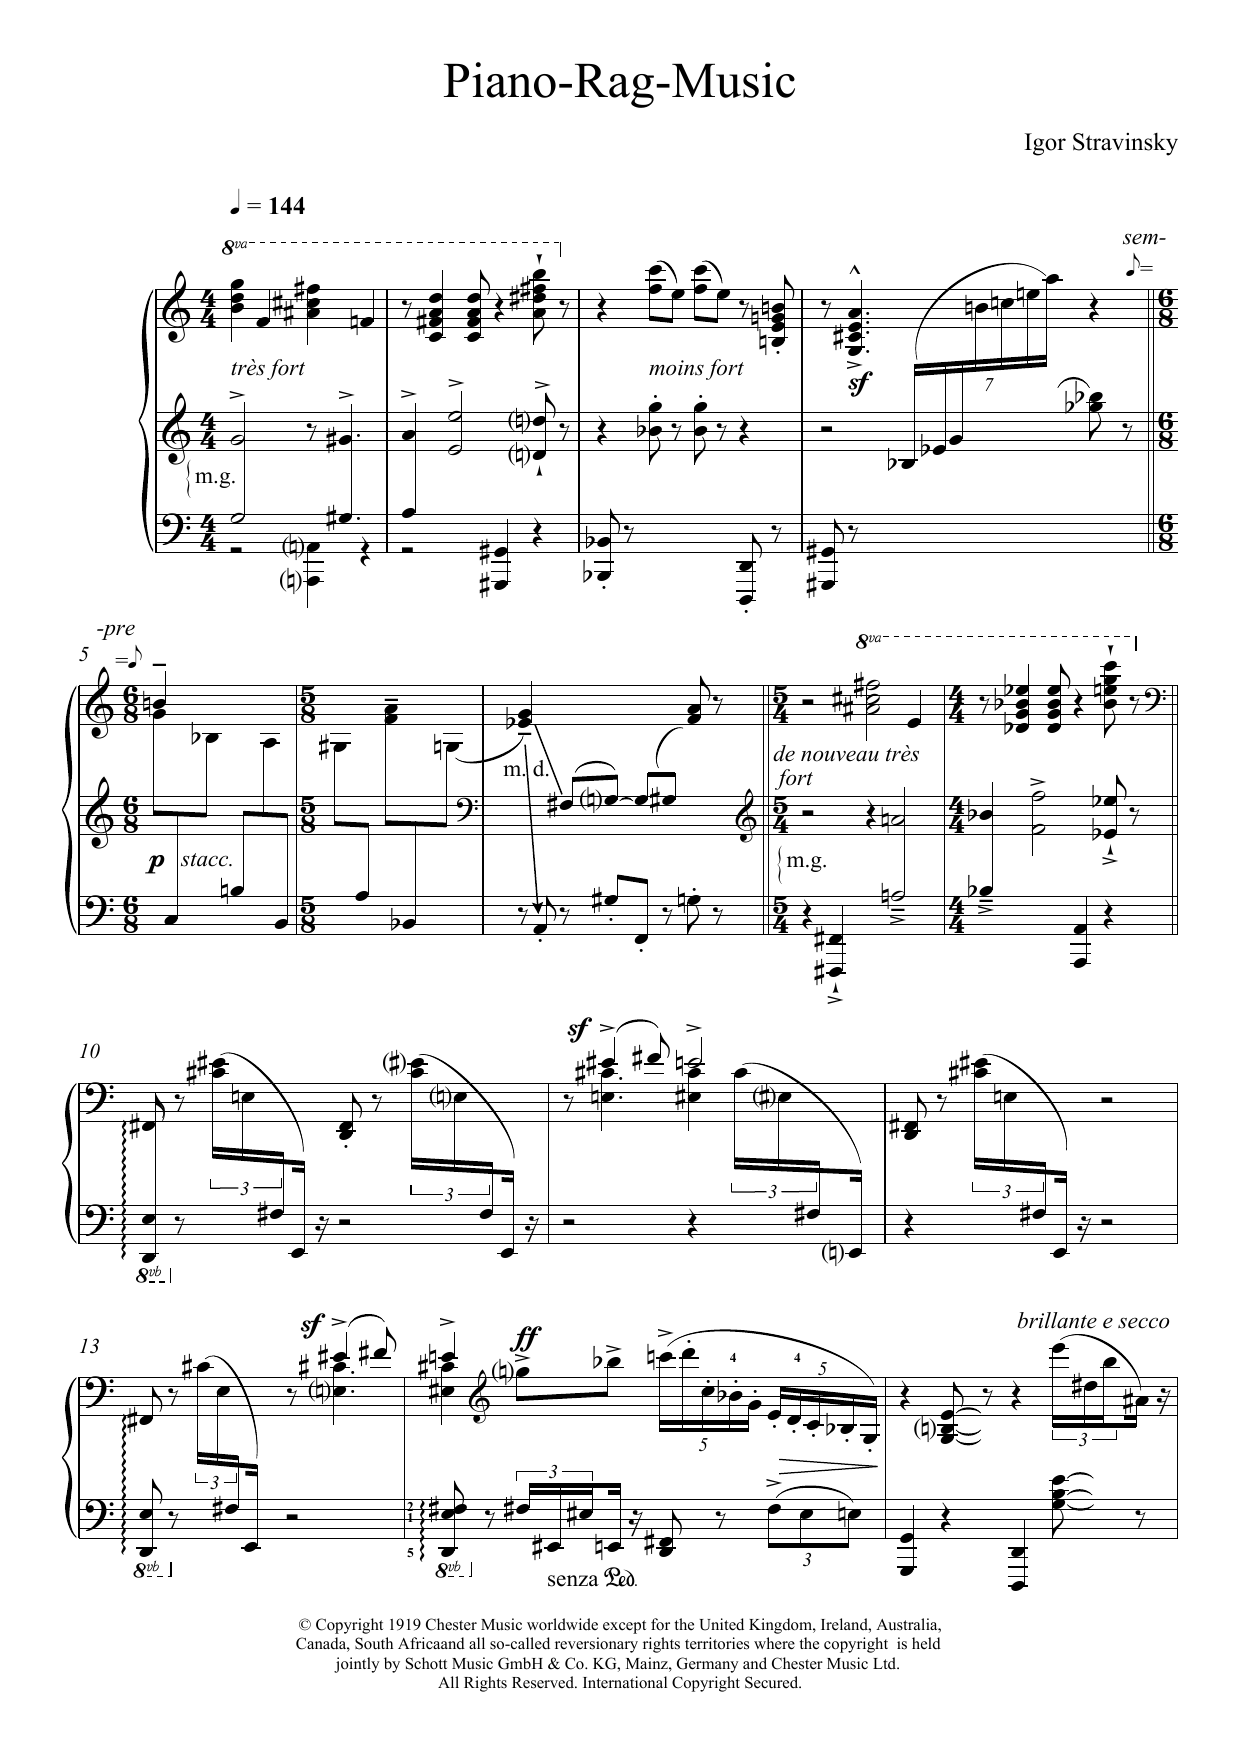 Download Igor Stravinsky Piano Rag Music Sheet Music